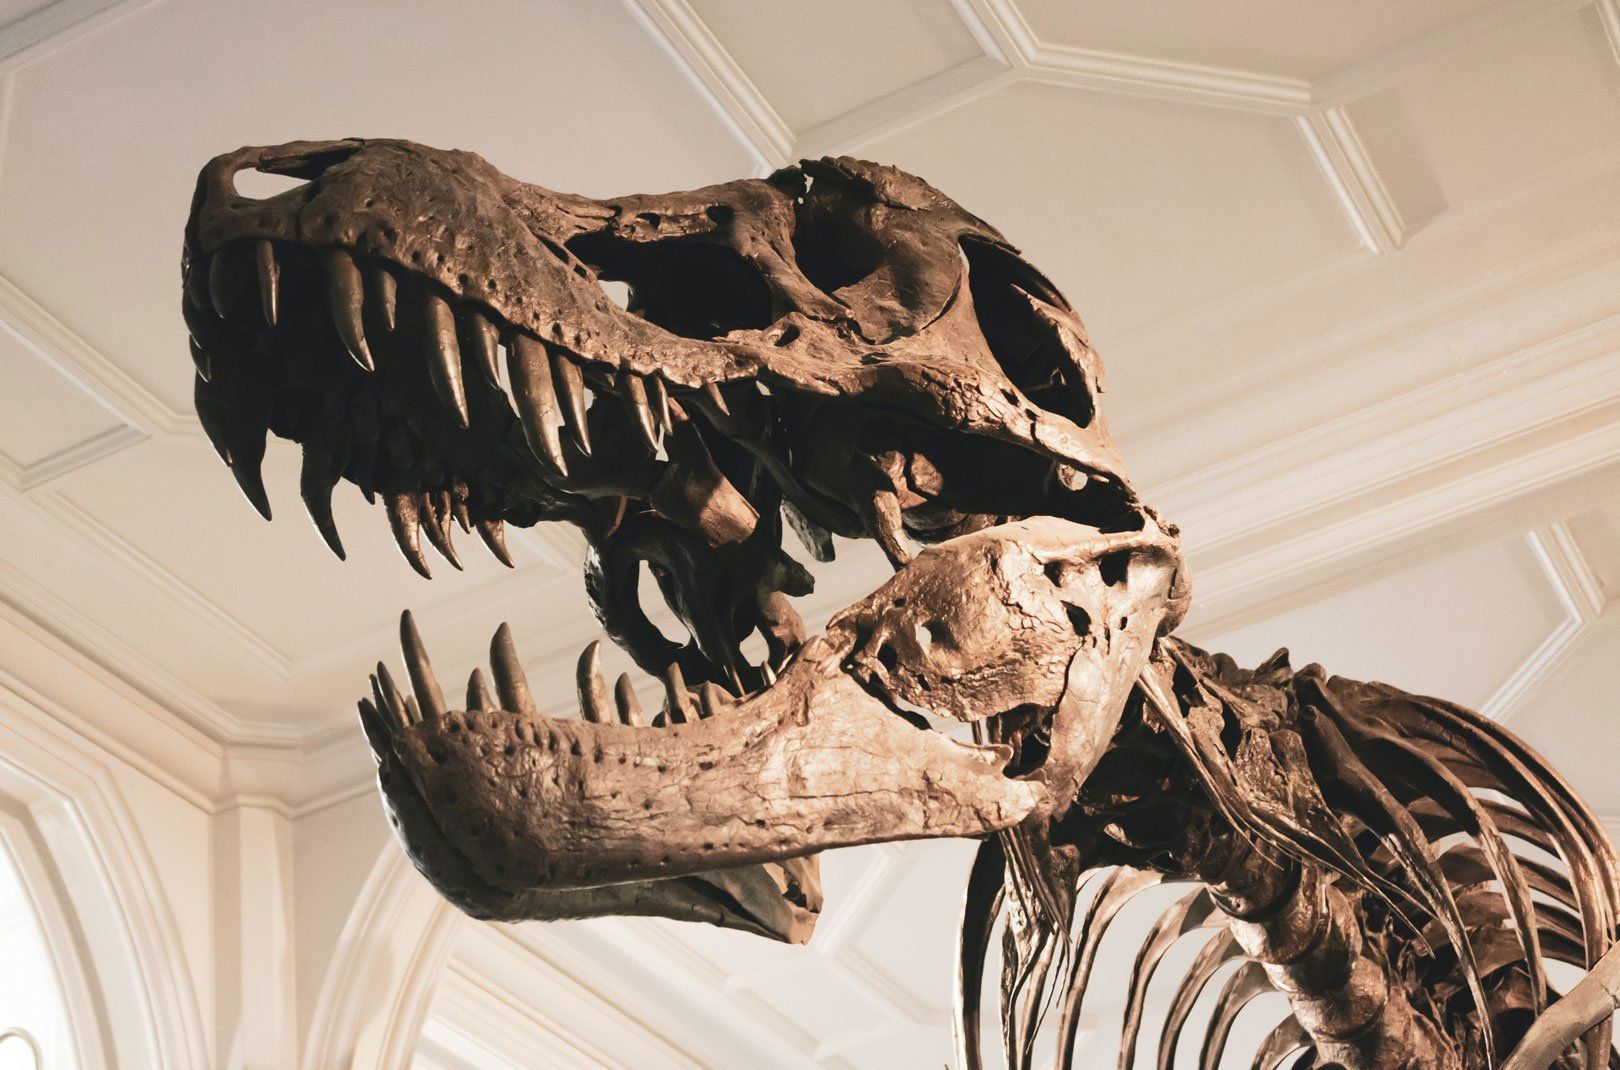 Museum dinosaur skeleton display